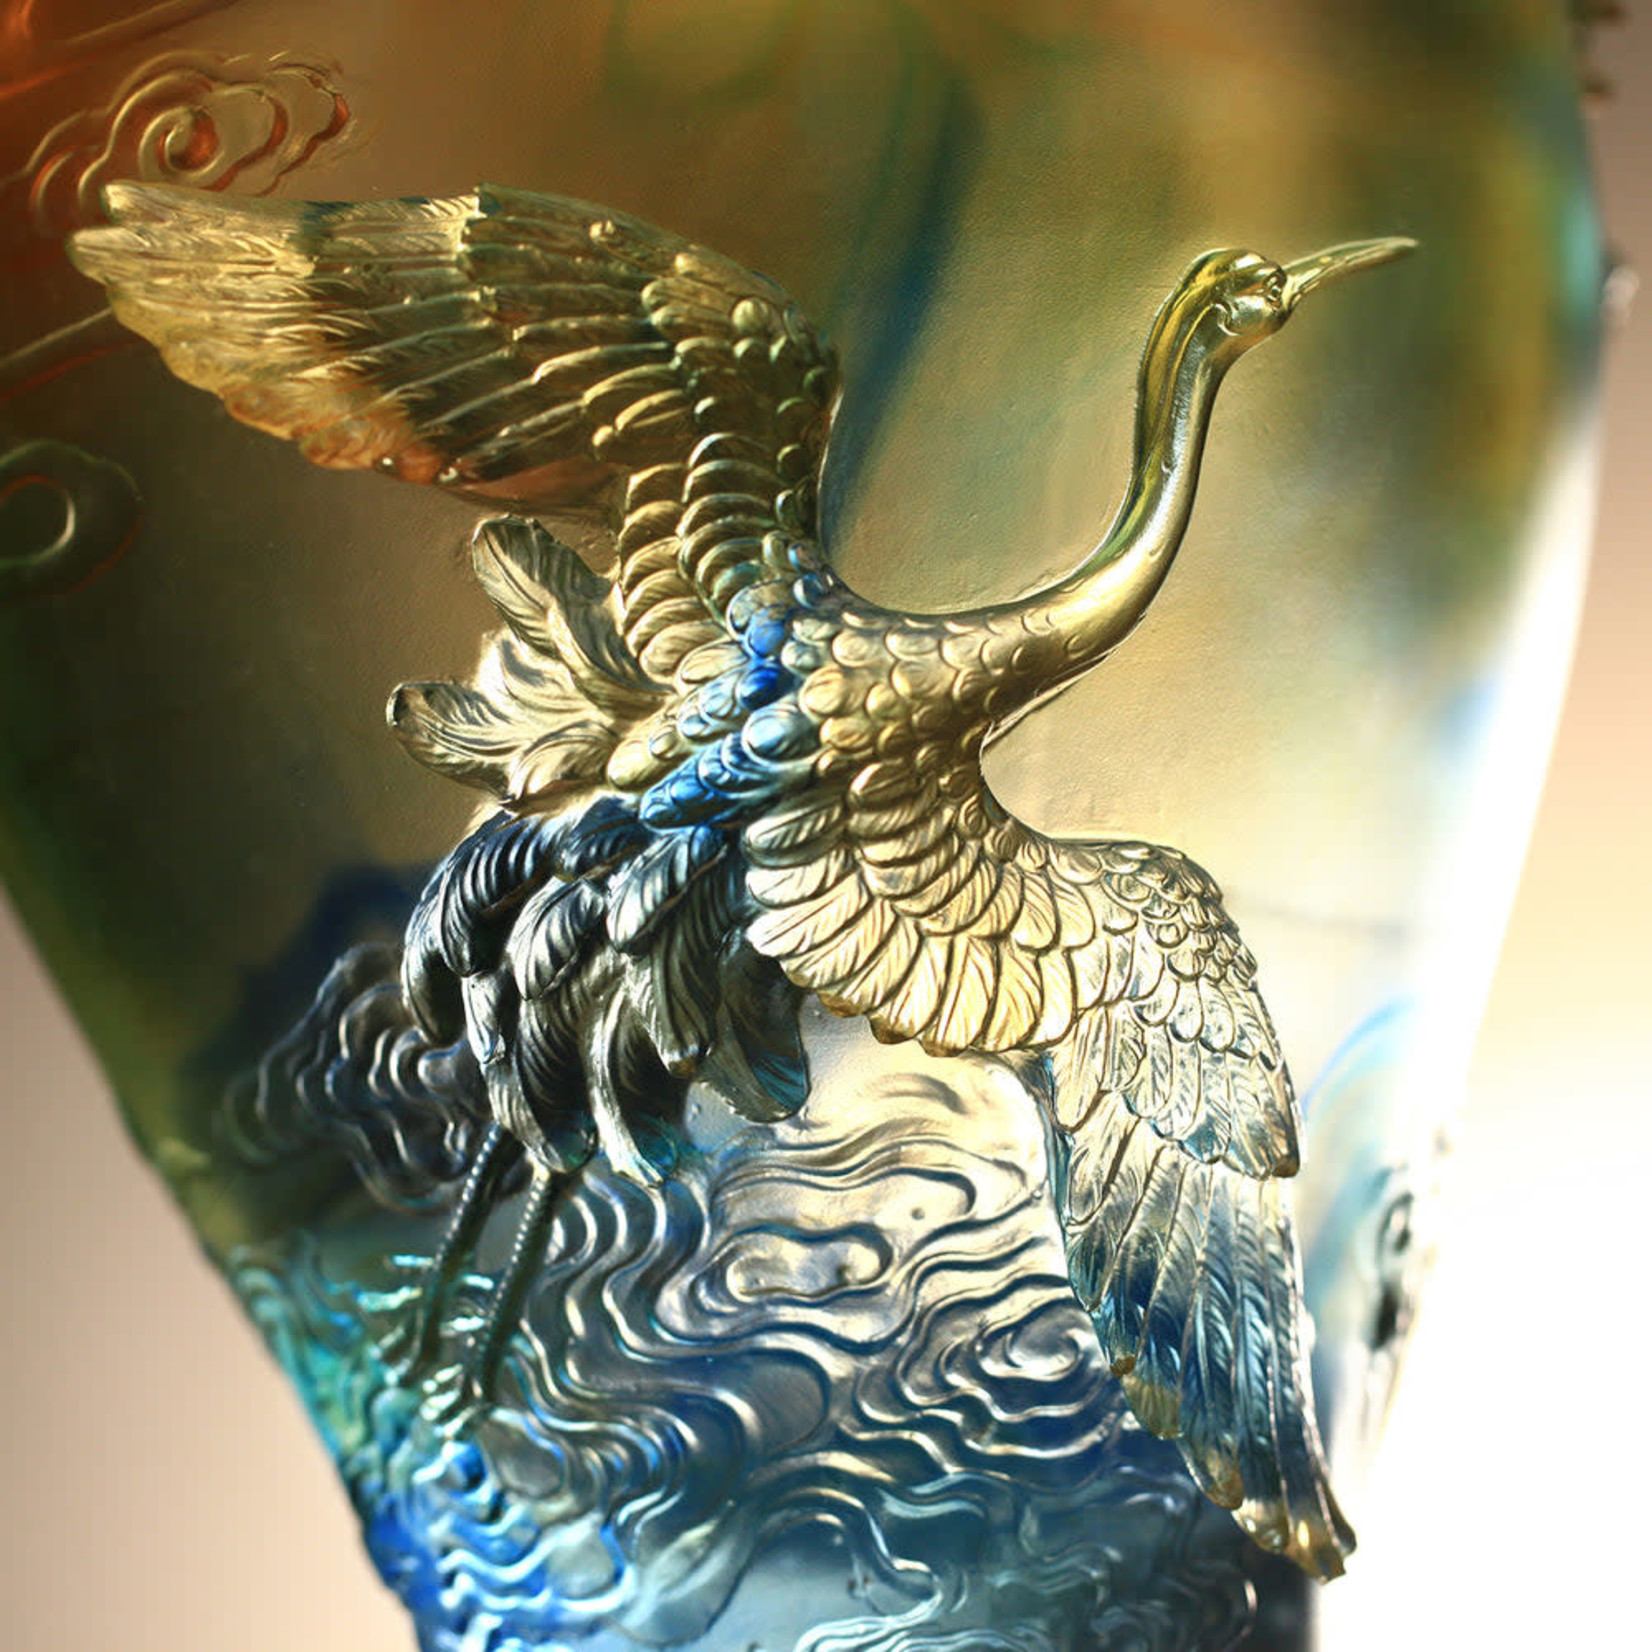 LIULI Crystal Art Crystal Floral Vase, Crane, "Flight of Legacy"